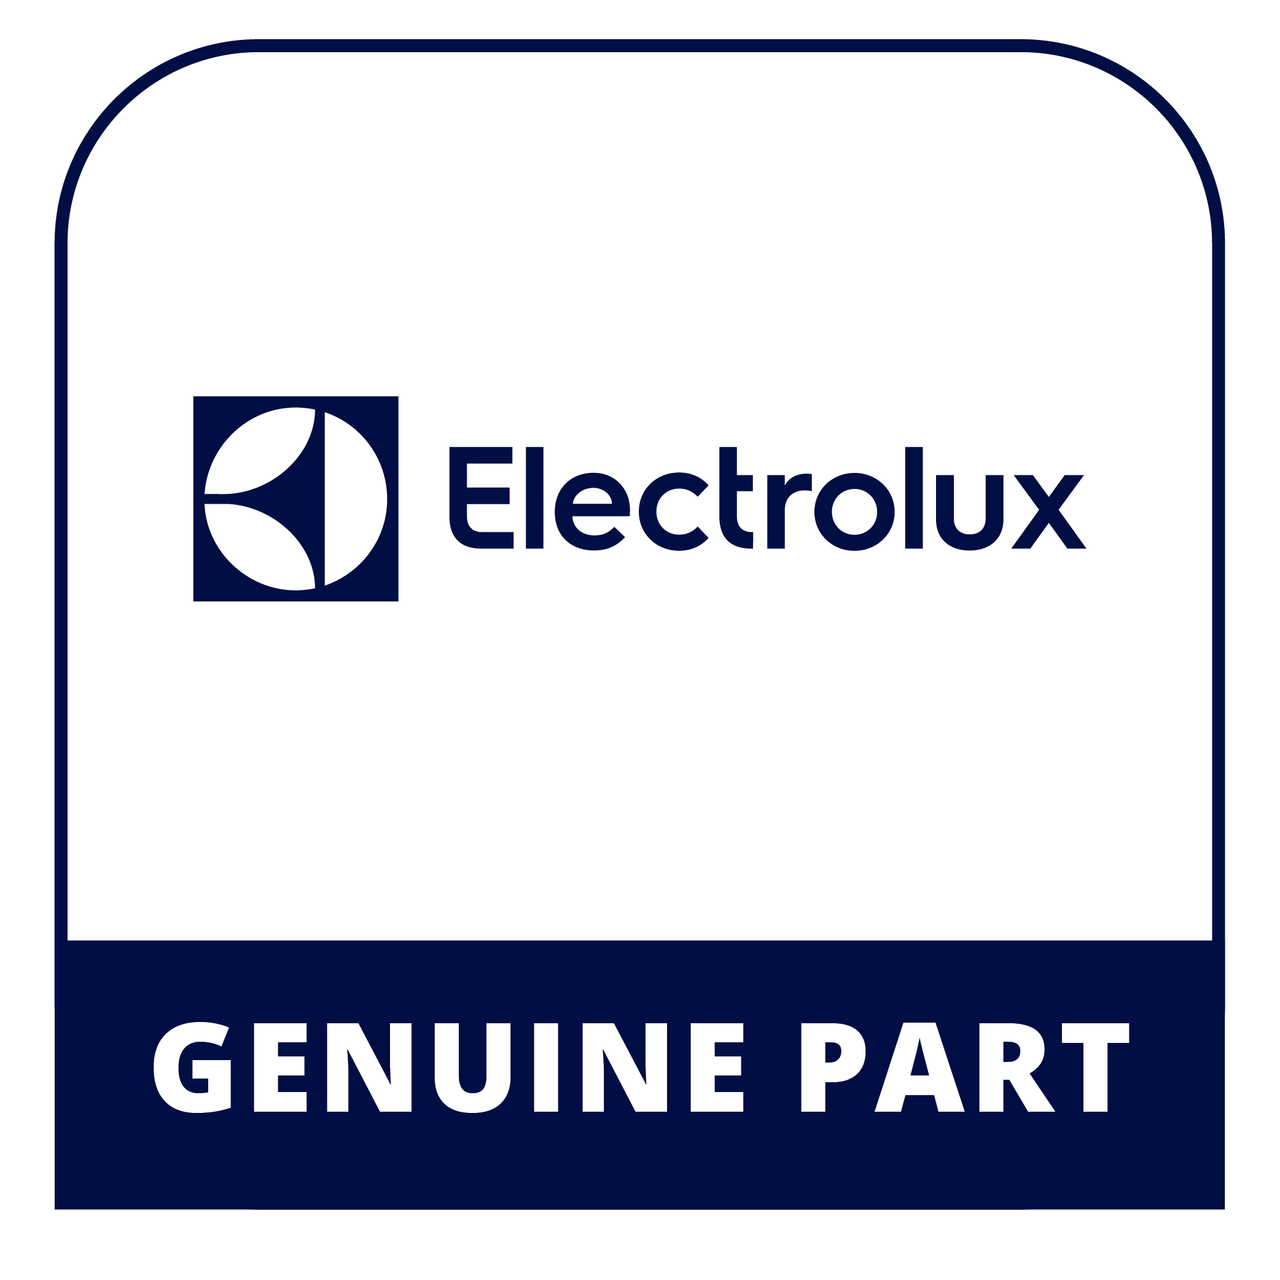 Frigidaire - Electrolux 316607600 Bracket - Genuine Electrolux Part